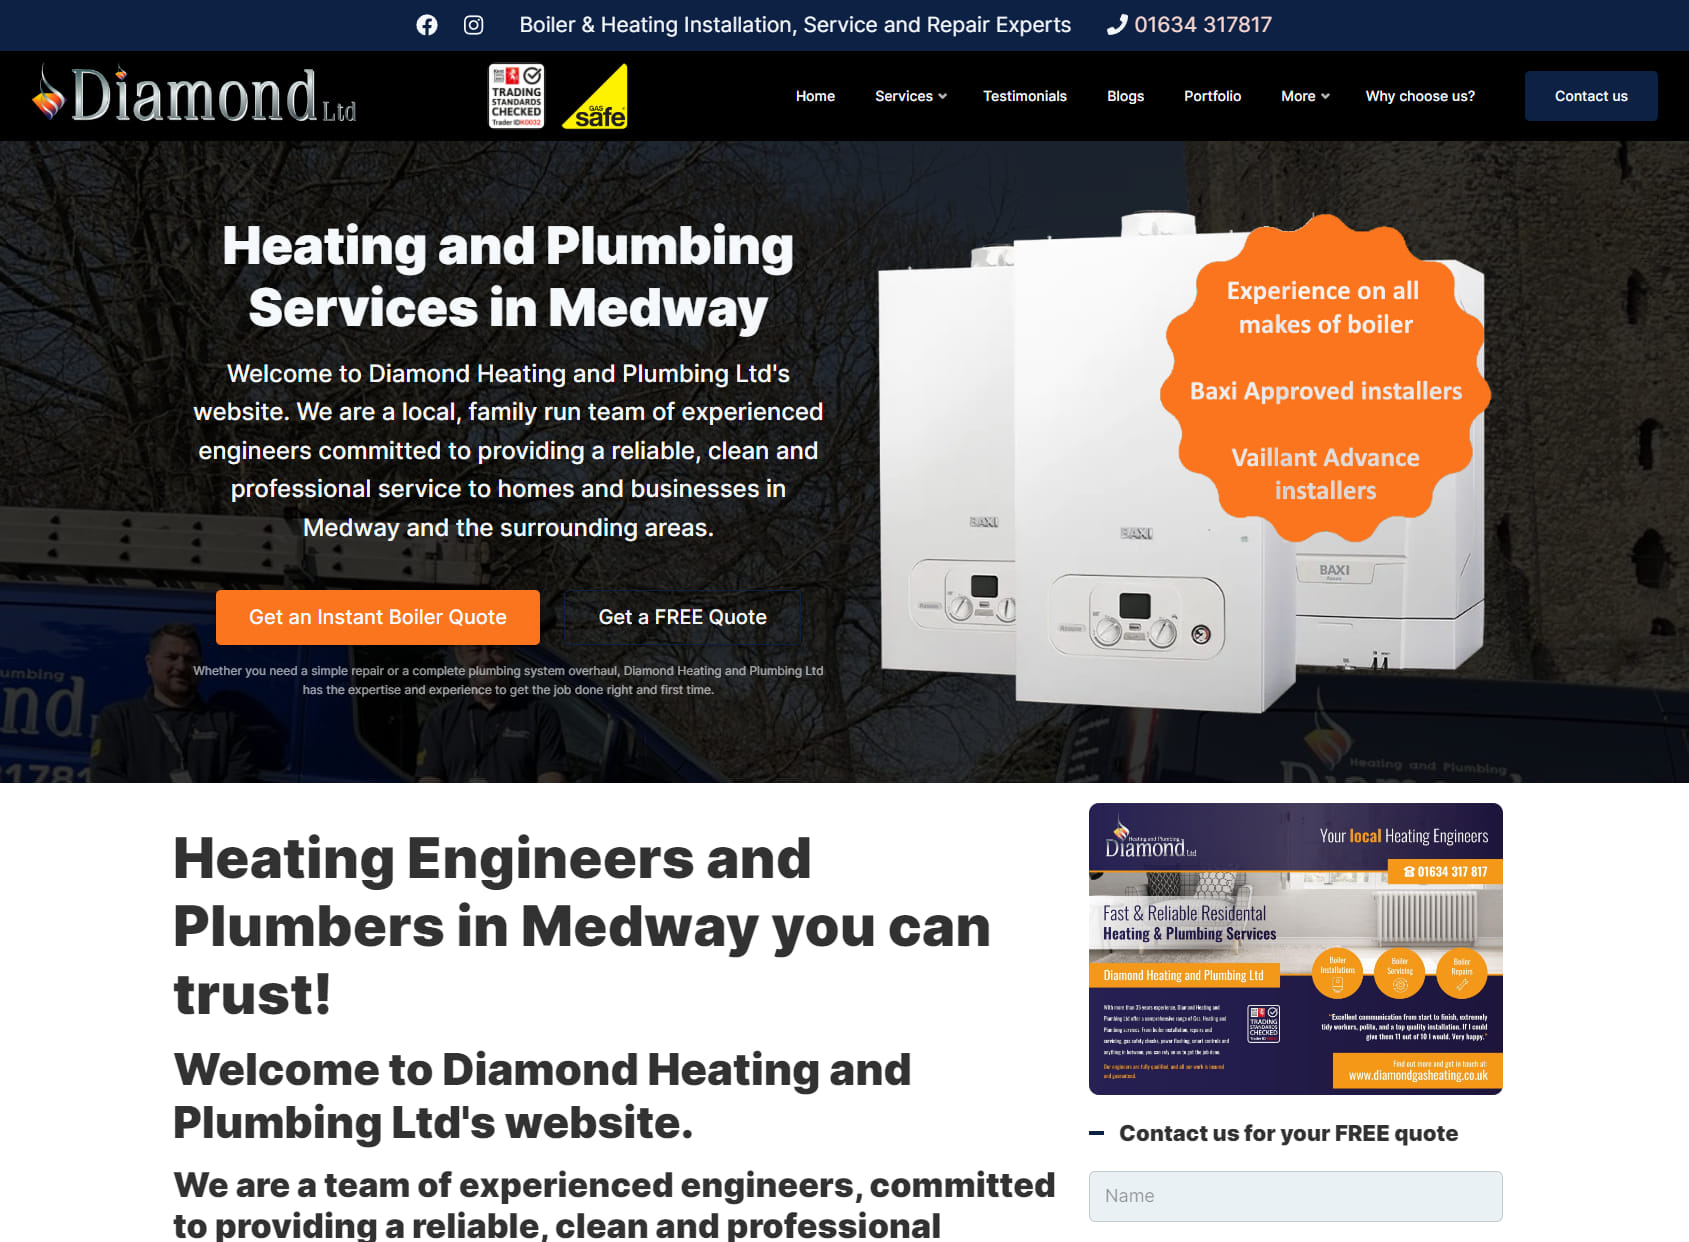 Diamond Heating & Plumbing Ltd